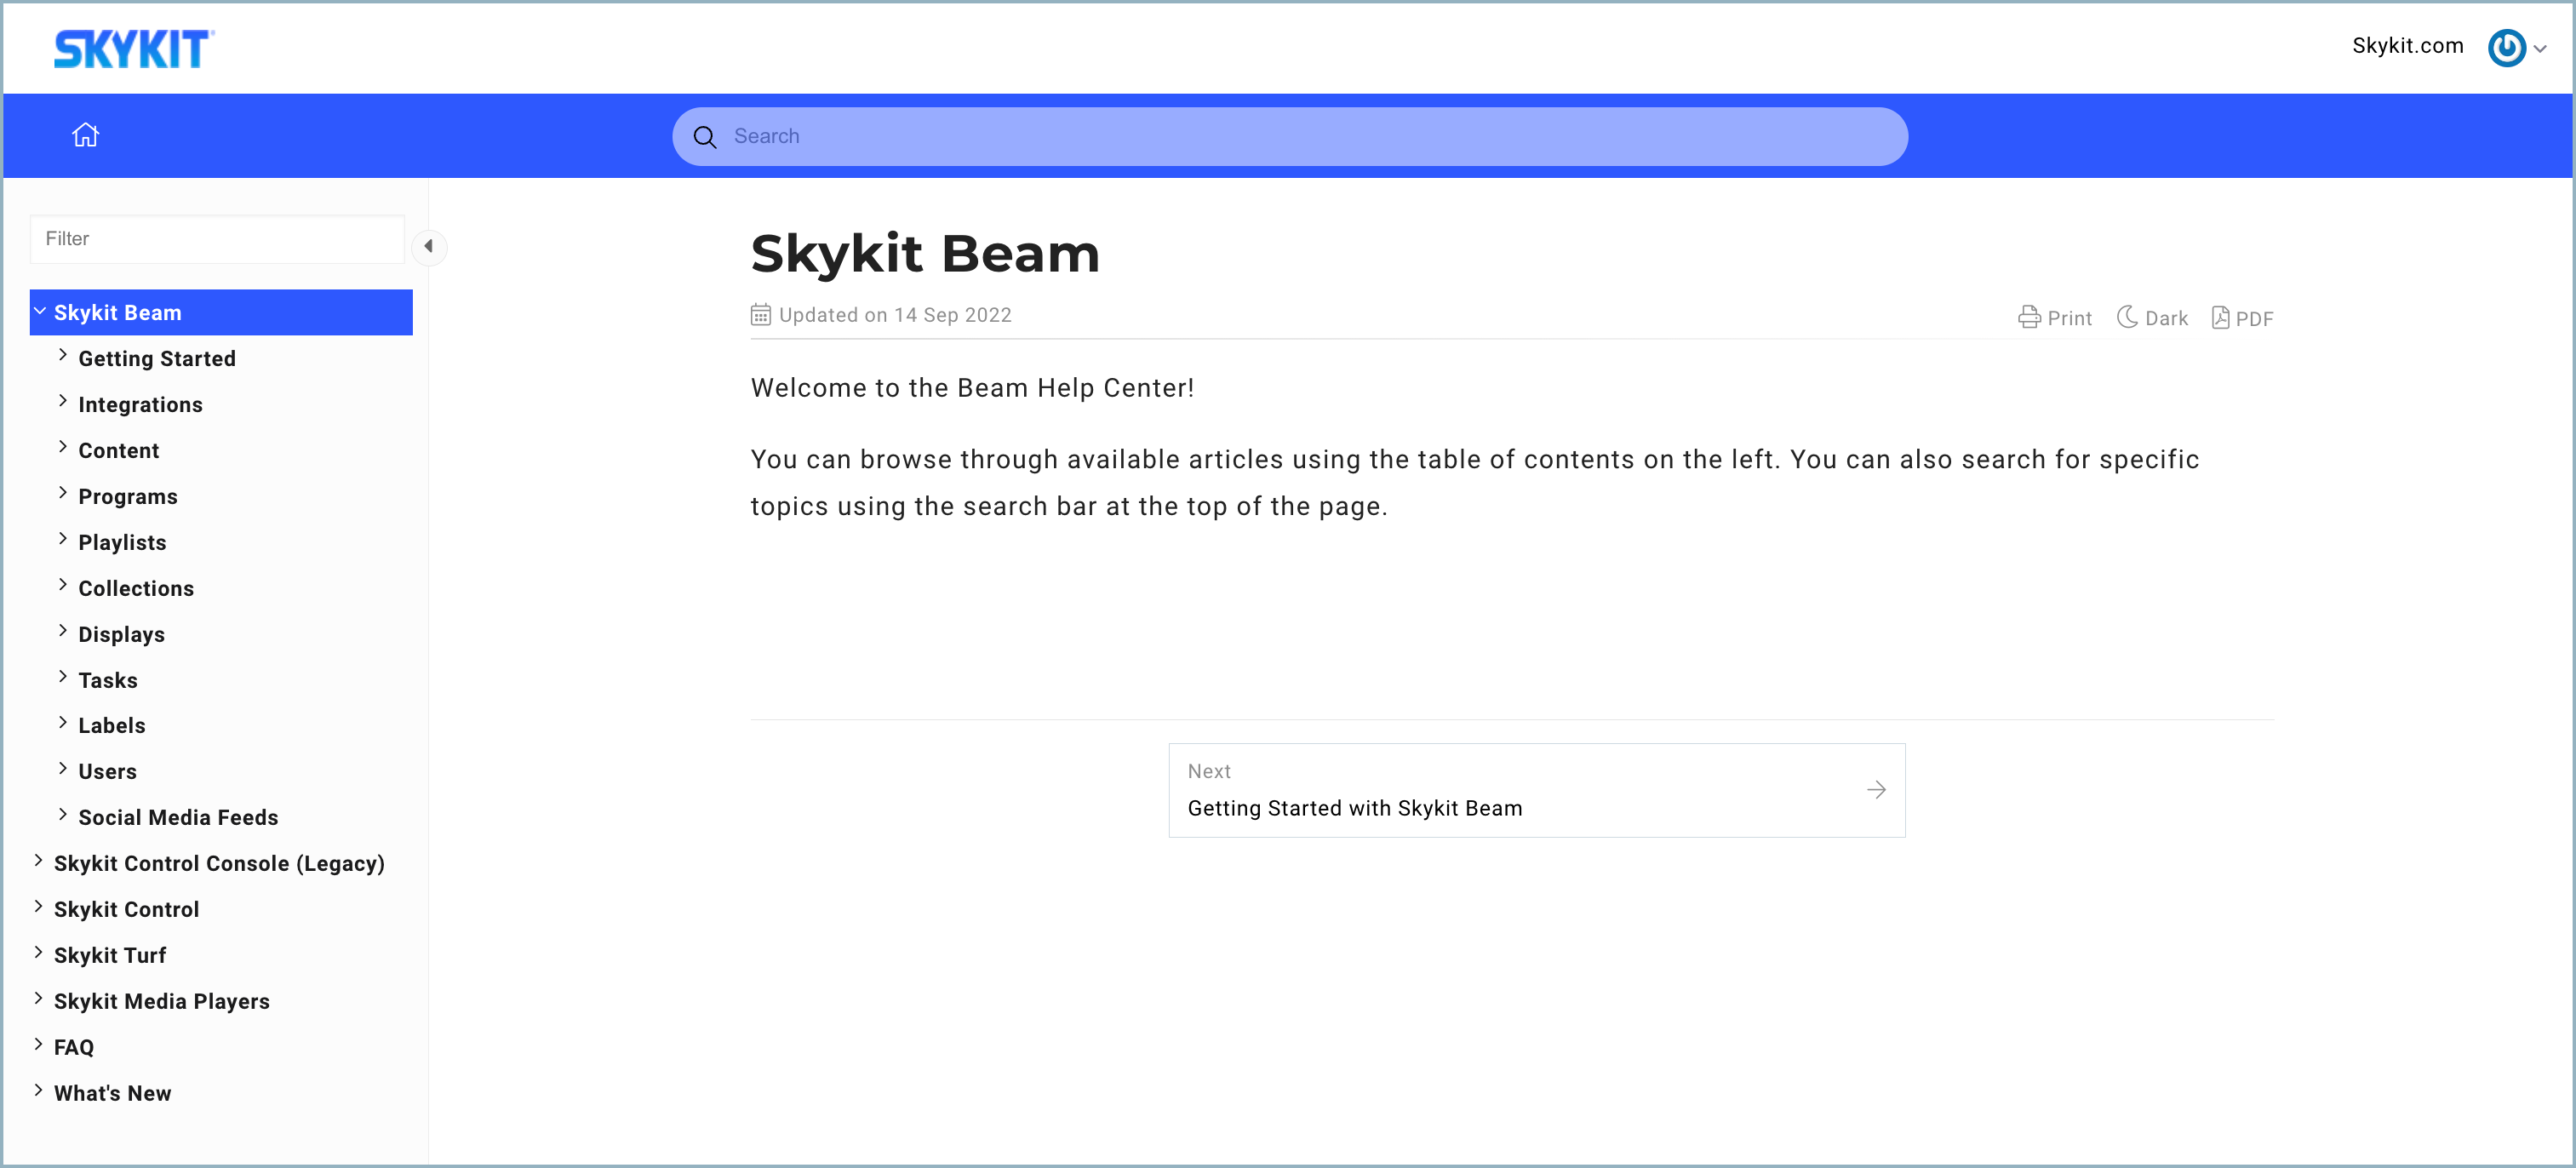 Skykit Beam category